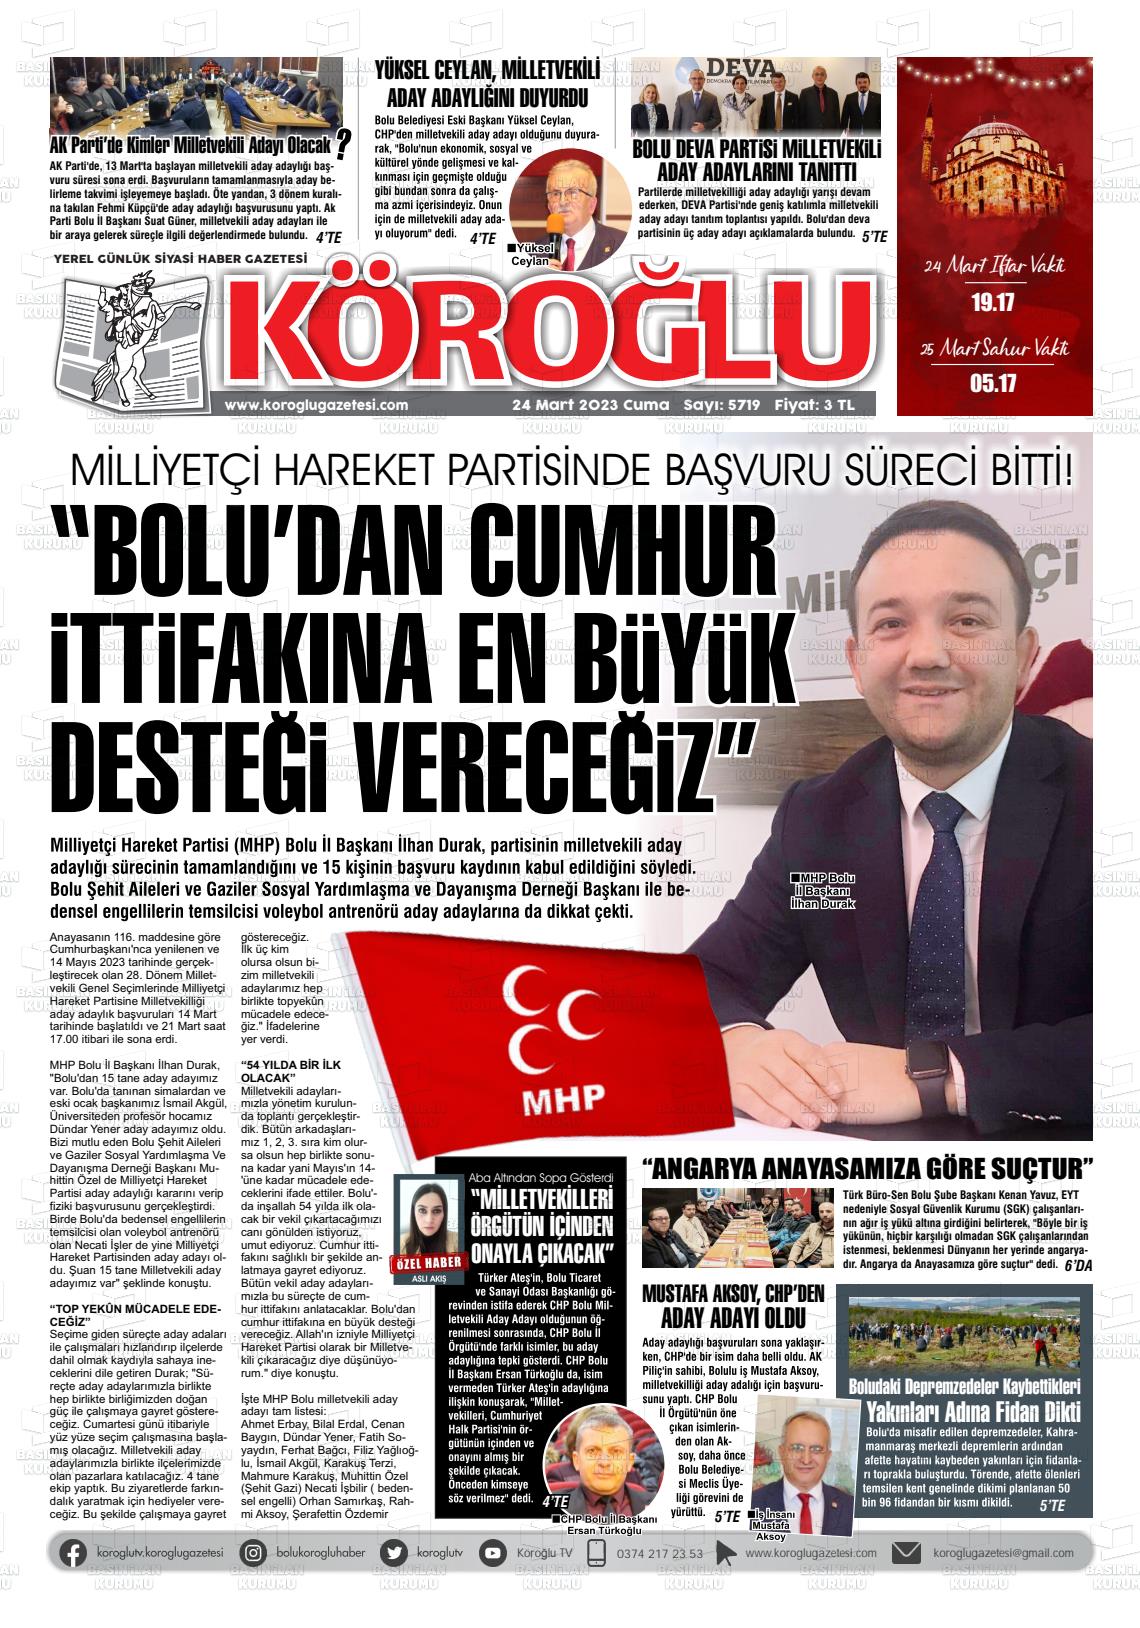 24 Mart 2023 Köroğlu Gazete Manşeti